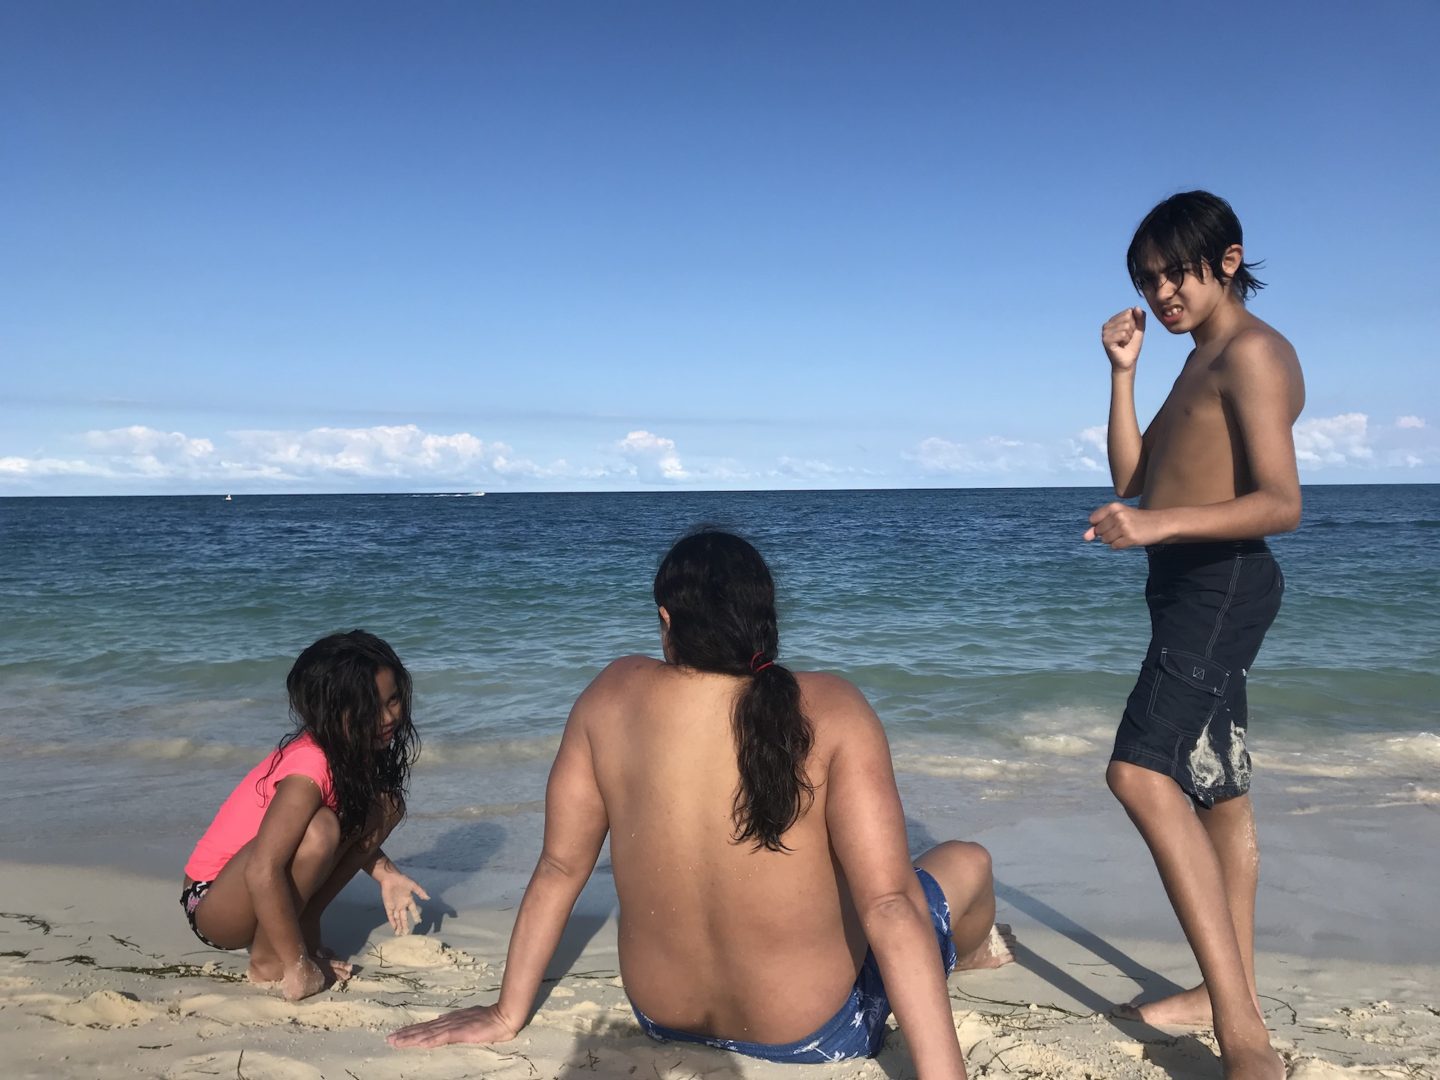 All-inclusive Vacation - Caribbean,
Dreams Playa Mujeres, Cancun, Mexico